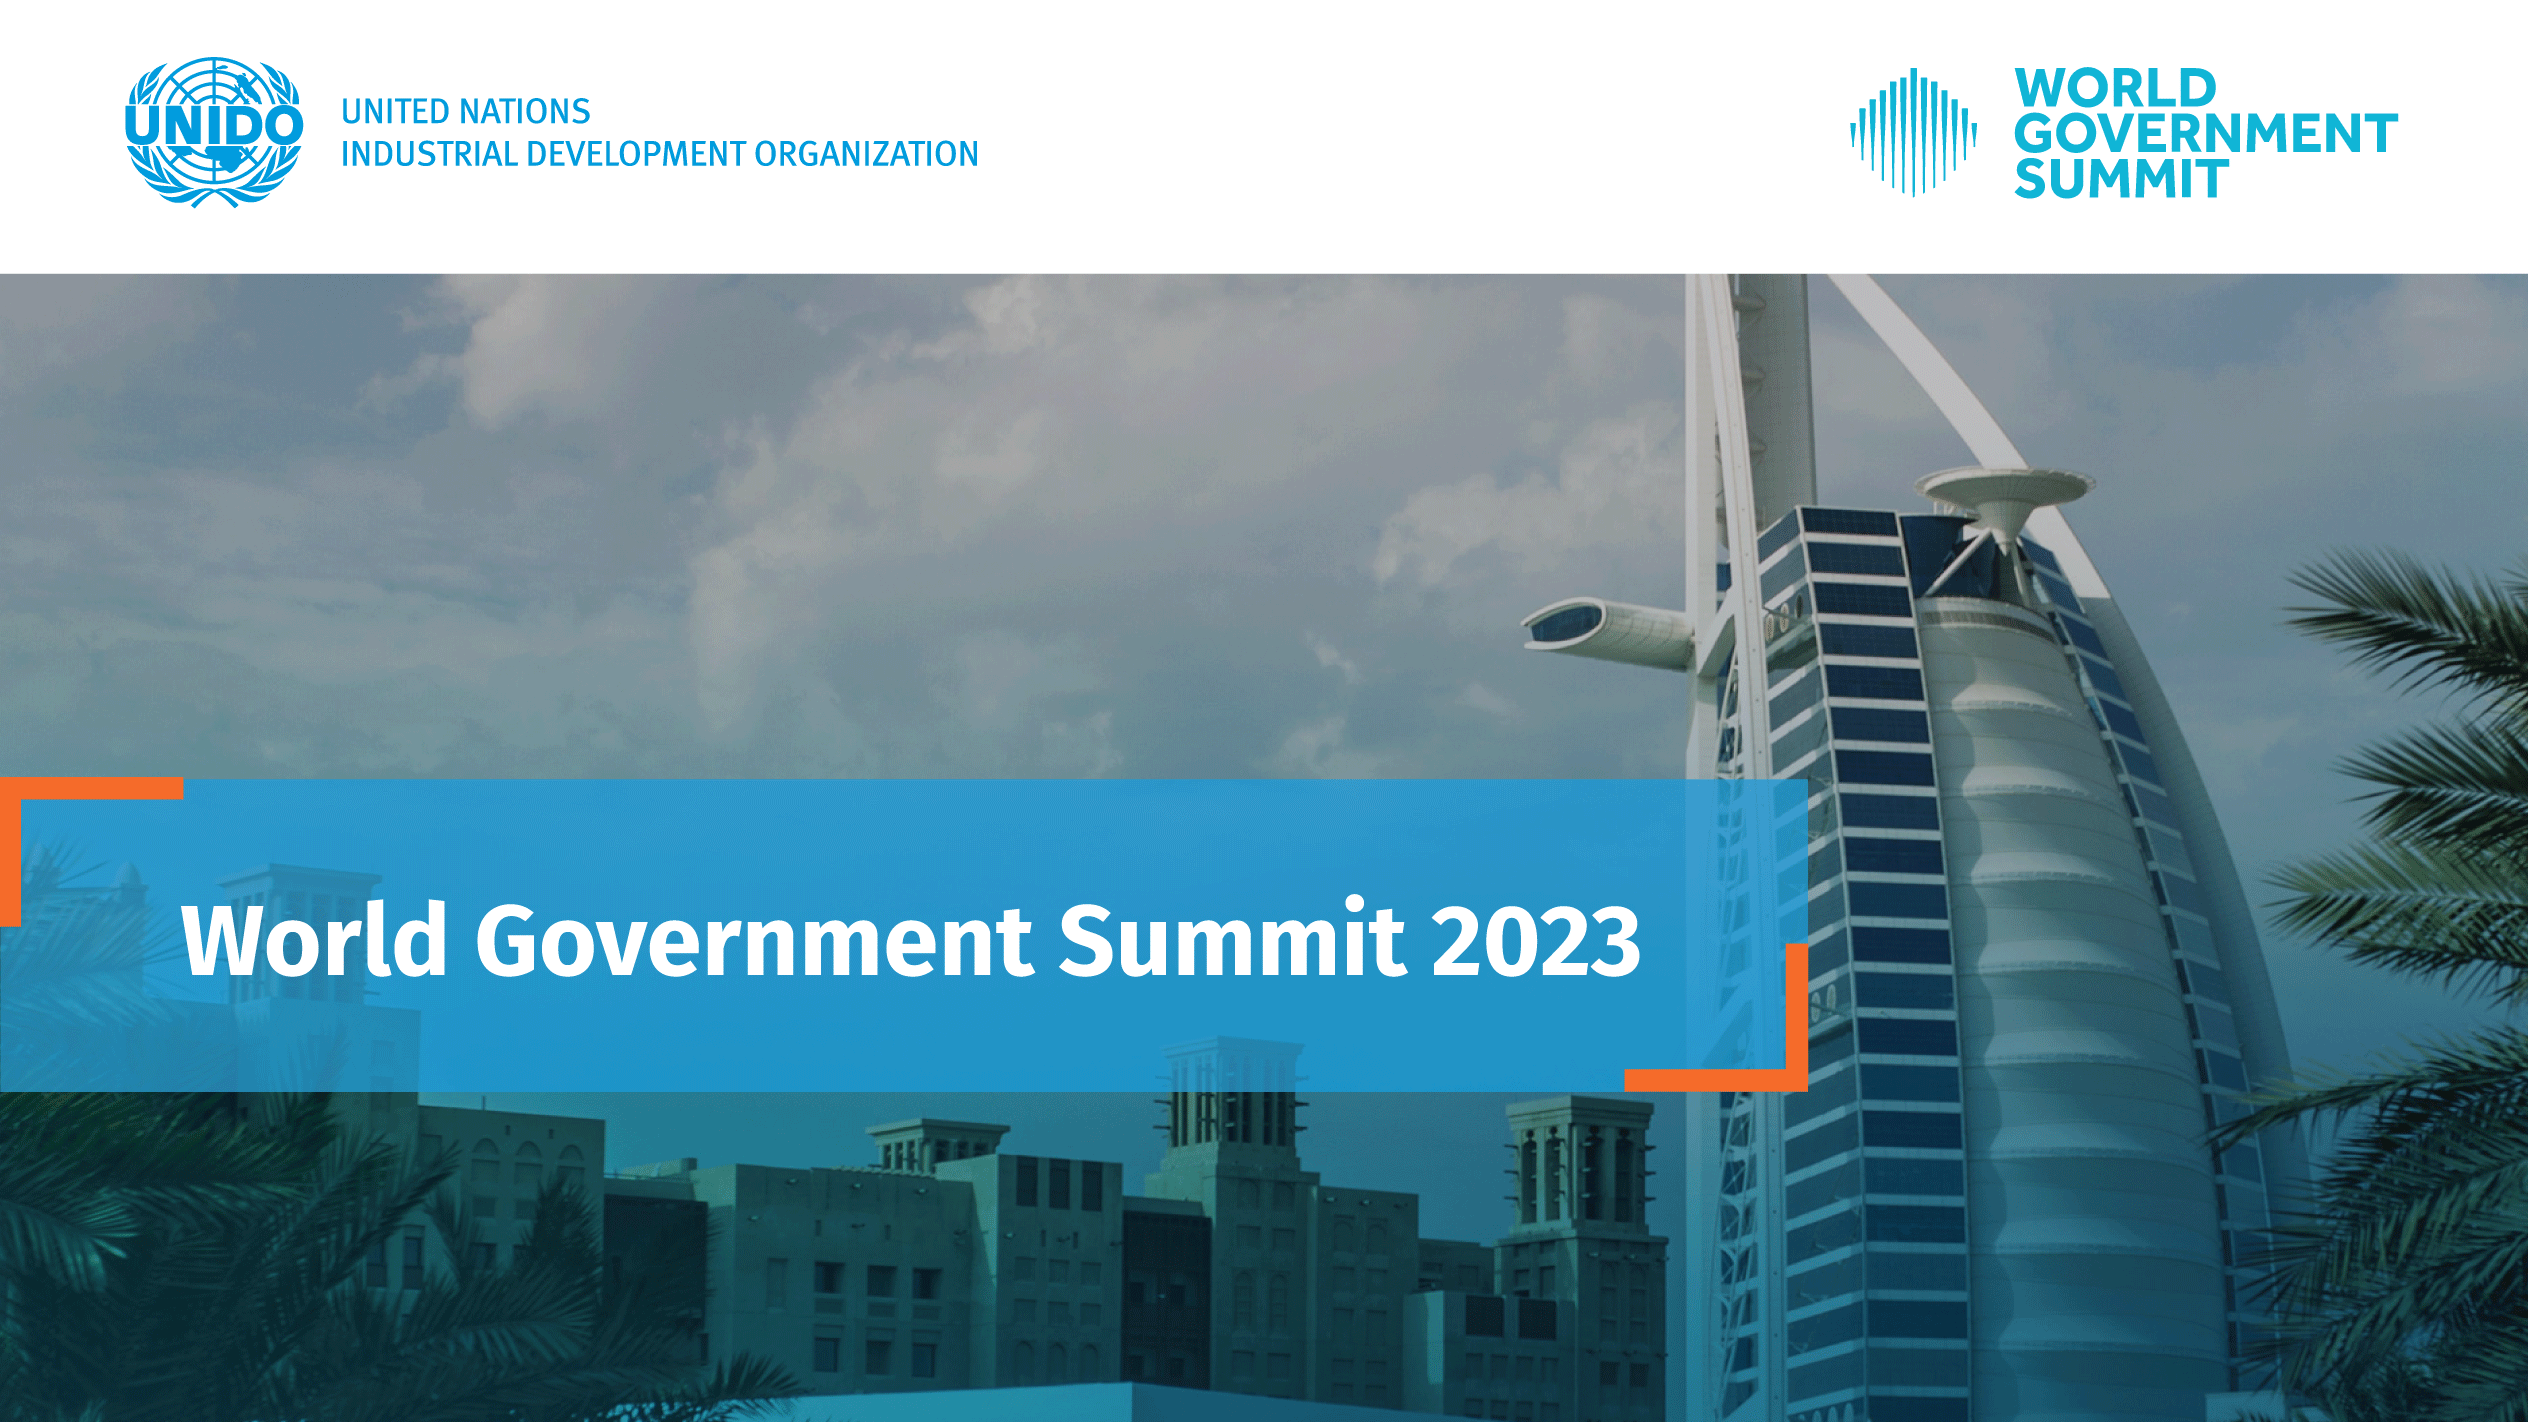 World Government Summit 2023 UNIDO